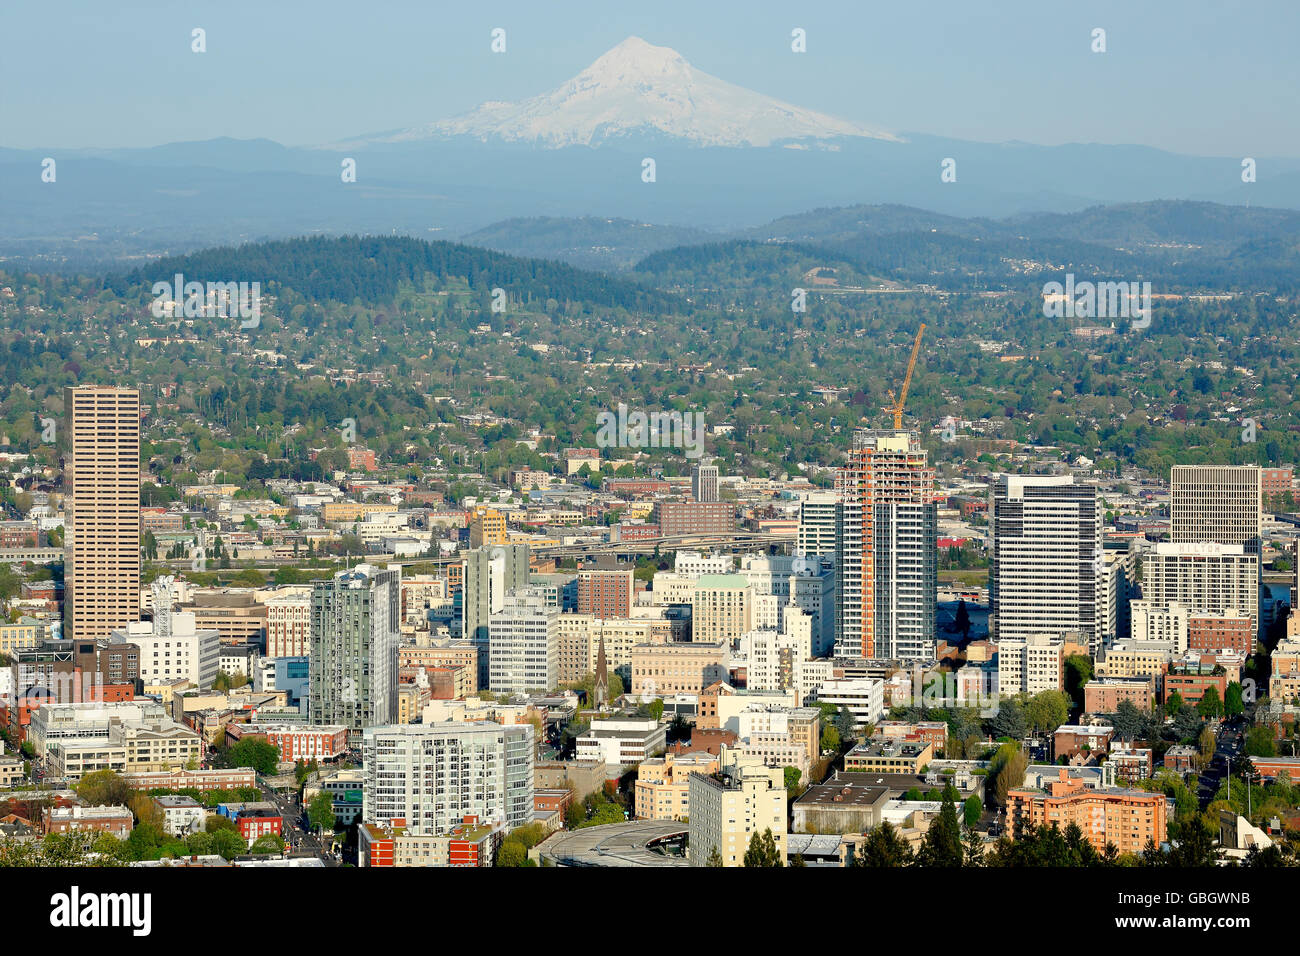 Skyline of Portland and Mount Hood volcano, Portland, Oregon USA Stock Photo